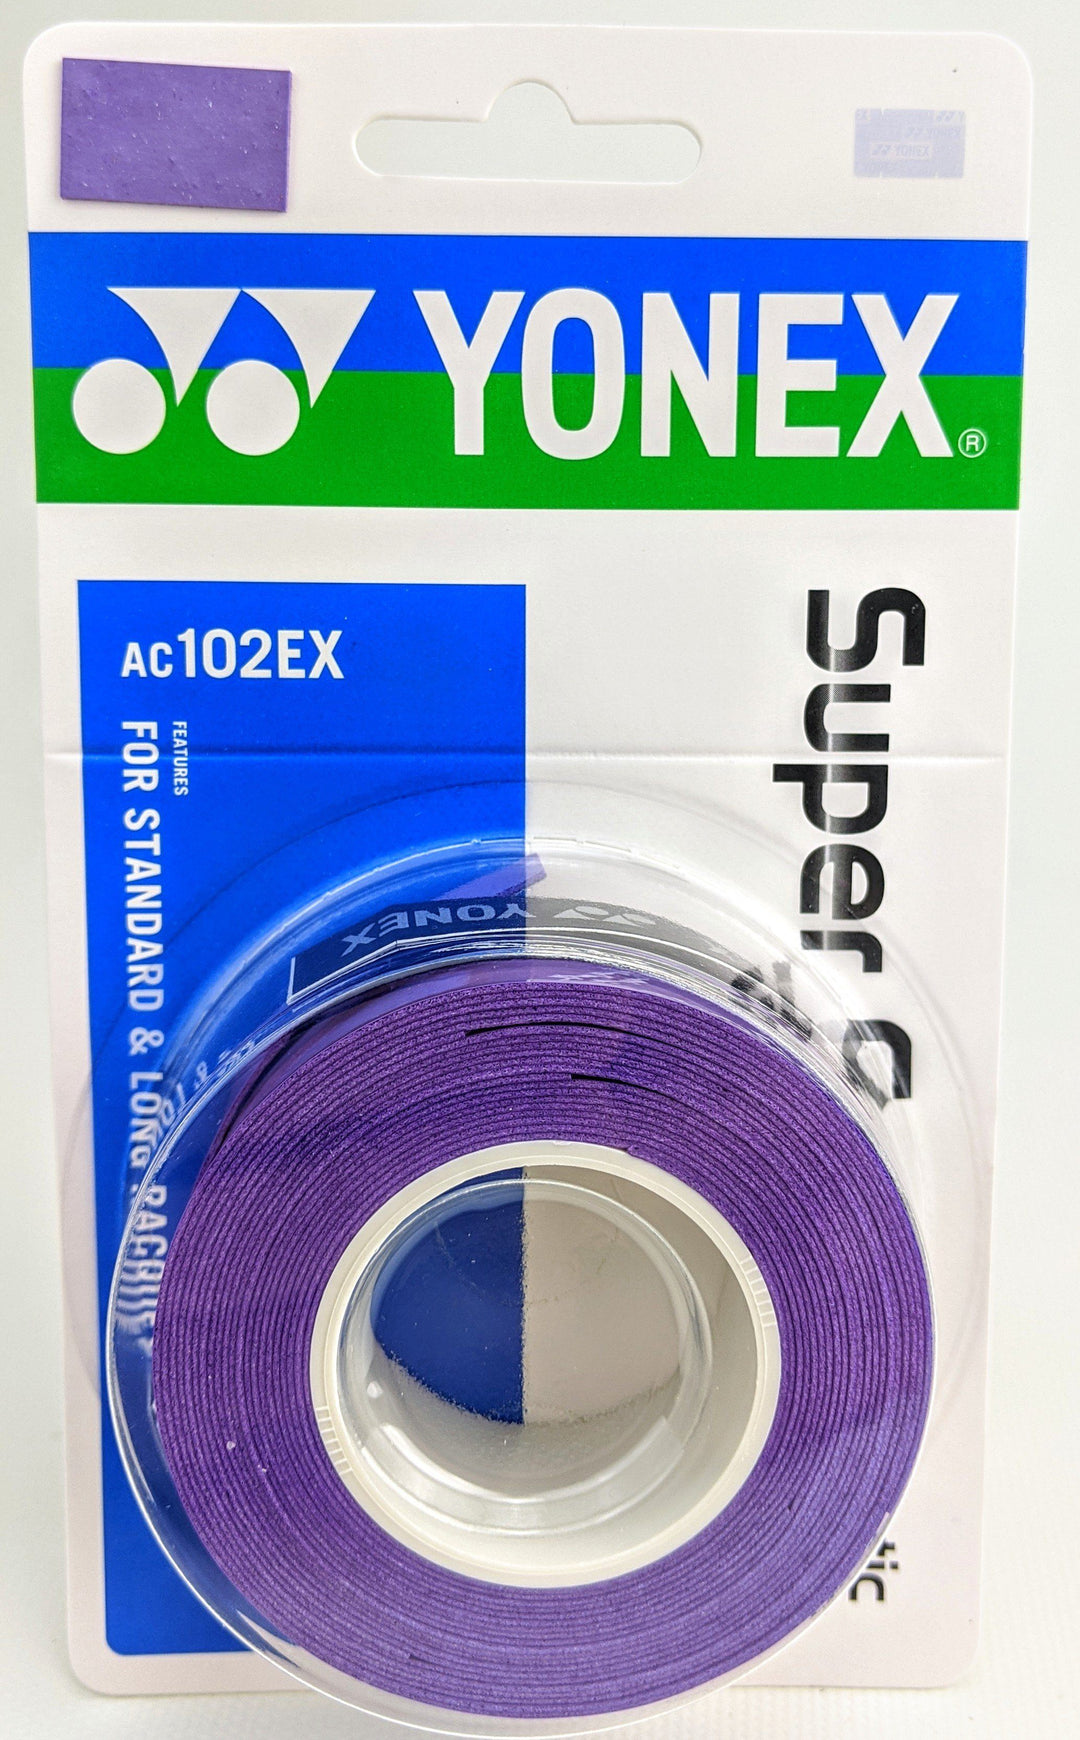 Yonex Super Grap grips AC-102EX 3-pack Grips Yonex Purple 